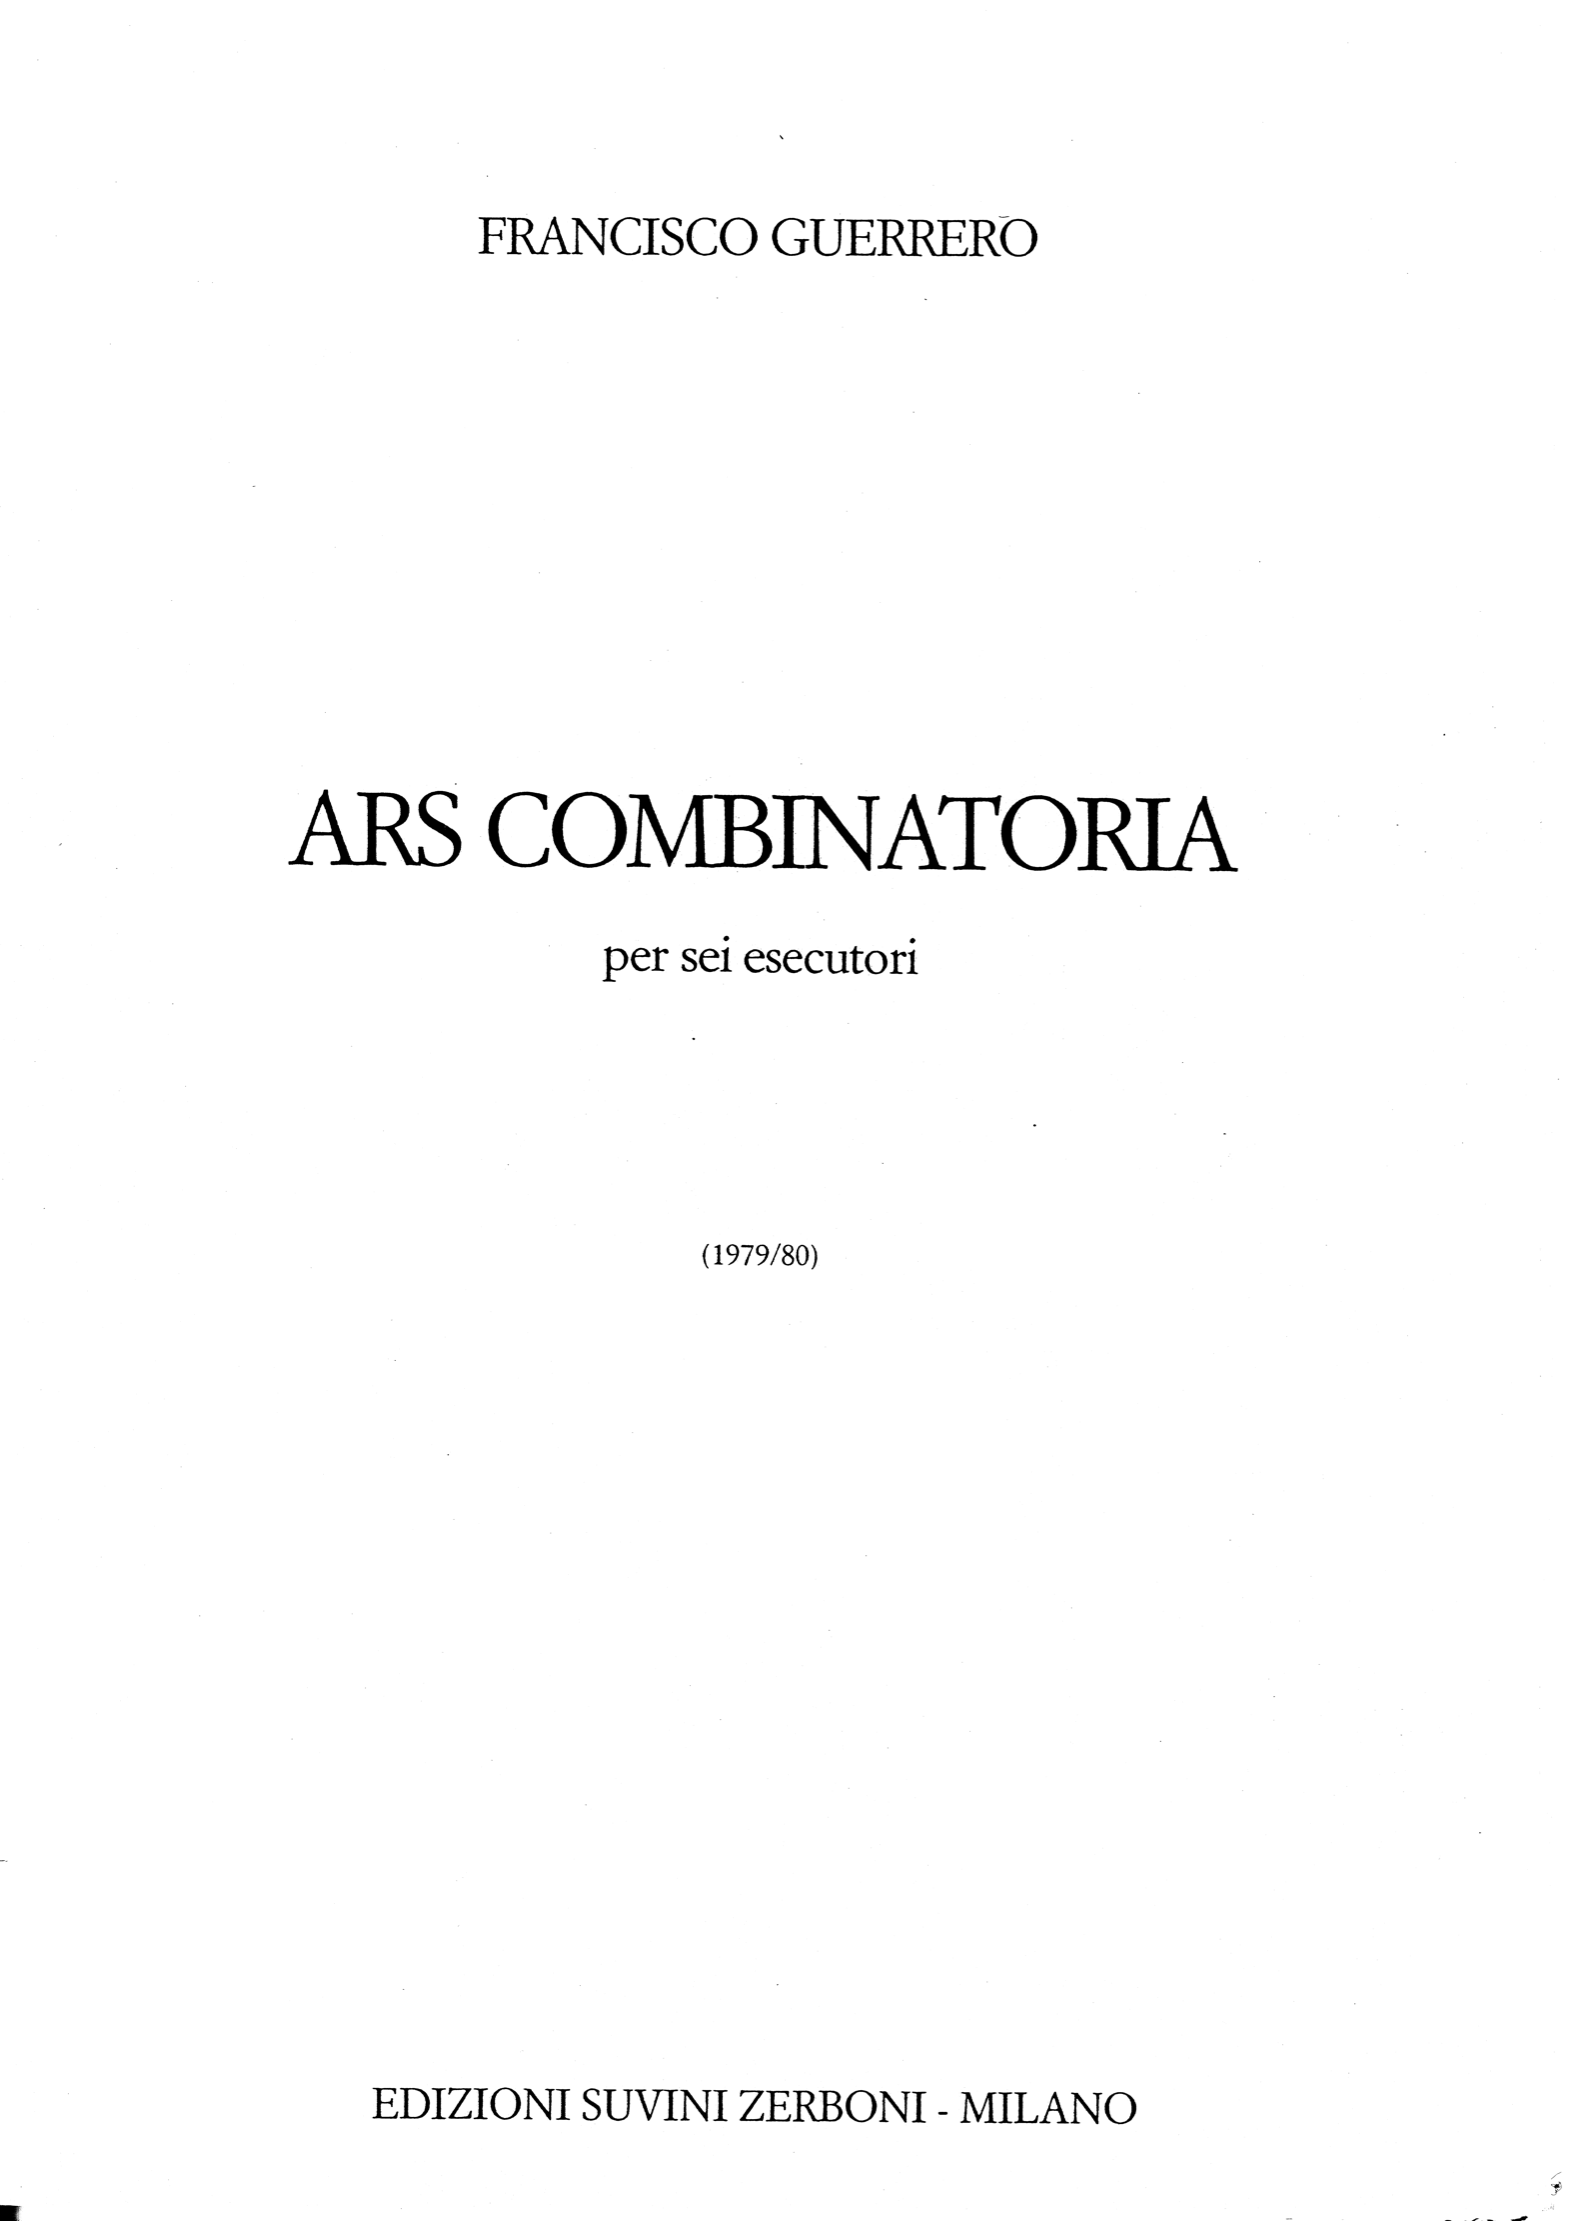 Ars combinatoria_Guerrero 1